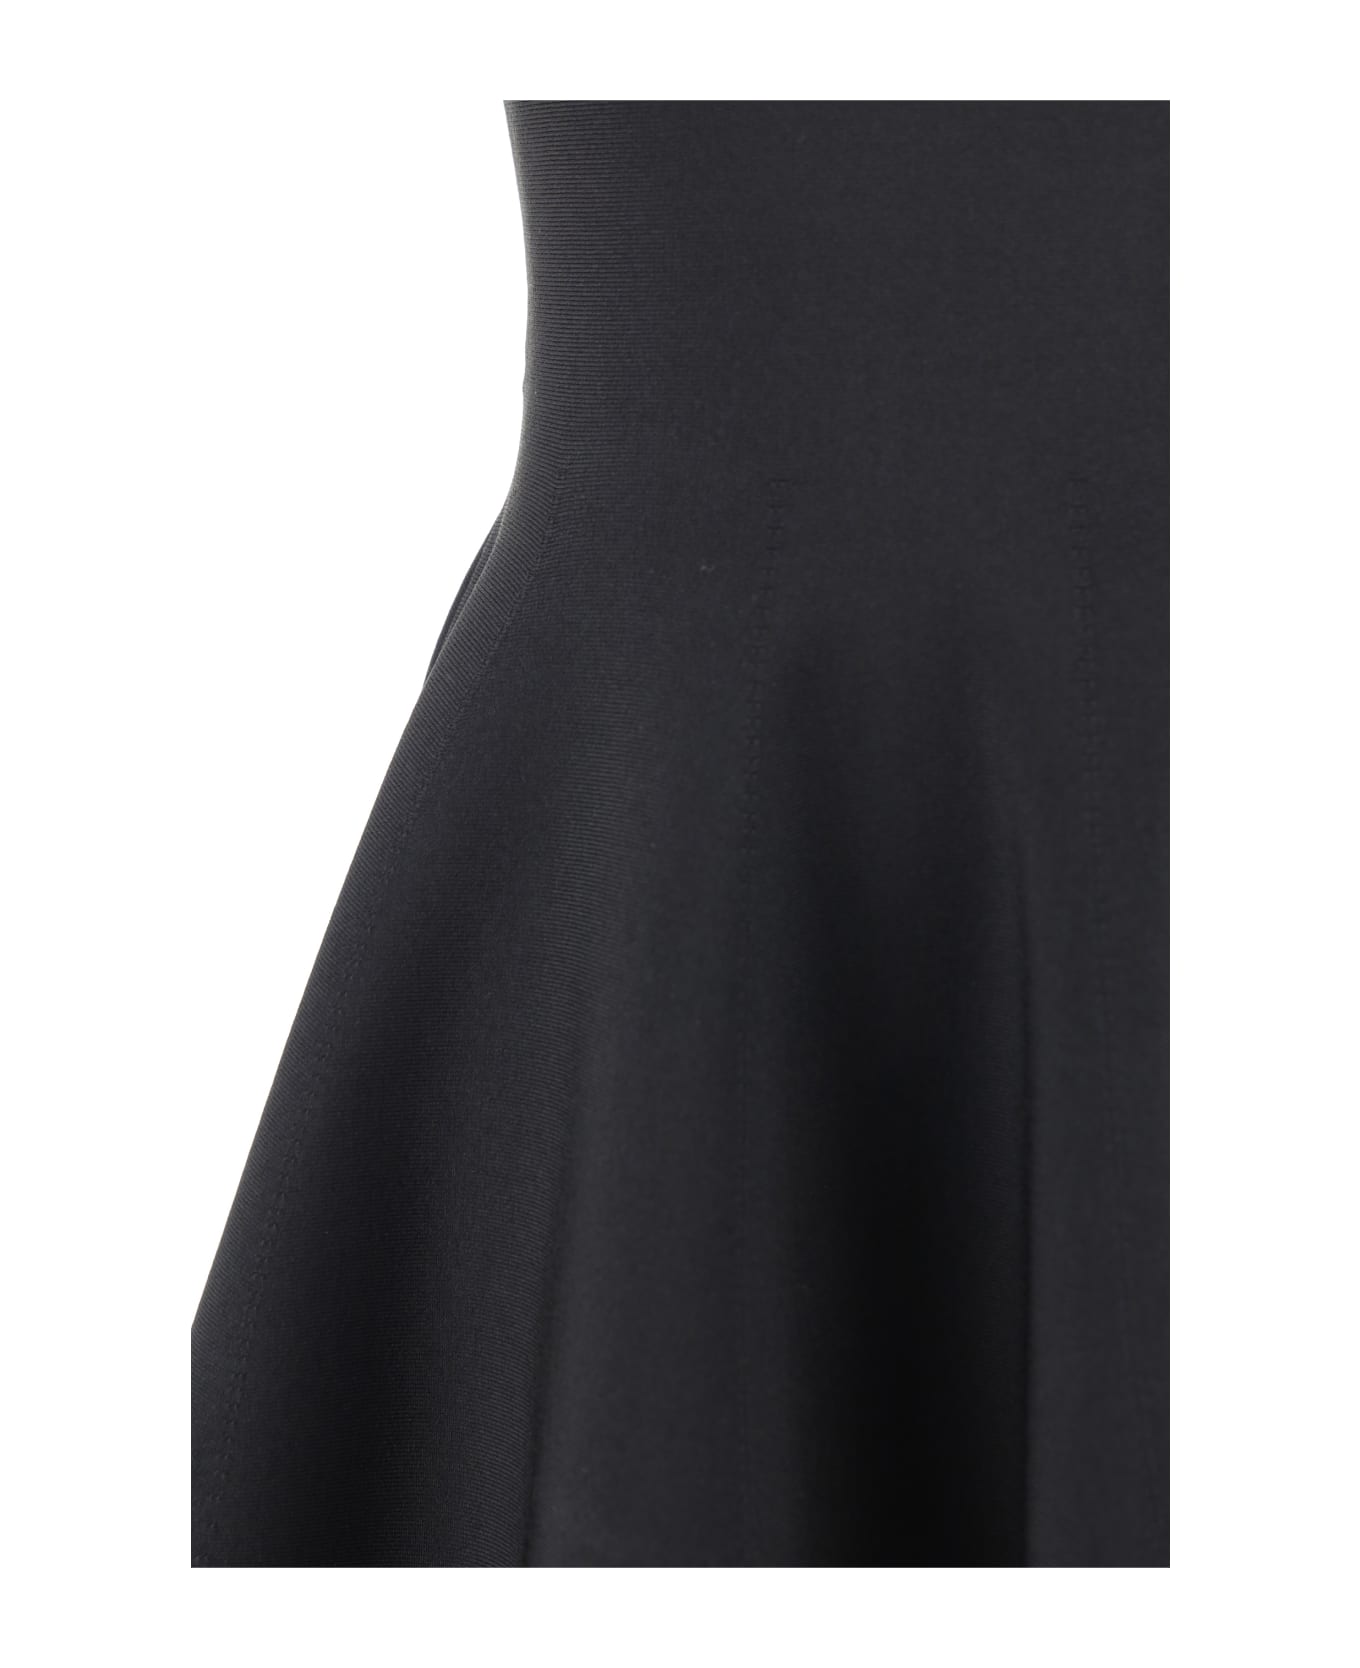 Alexander McQueen Mini Dress - Black